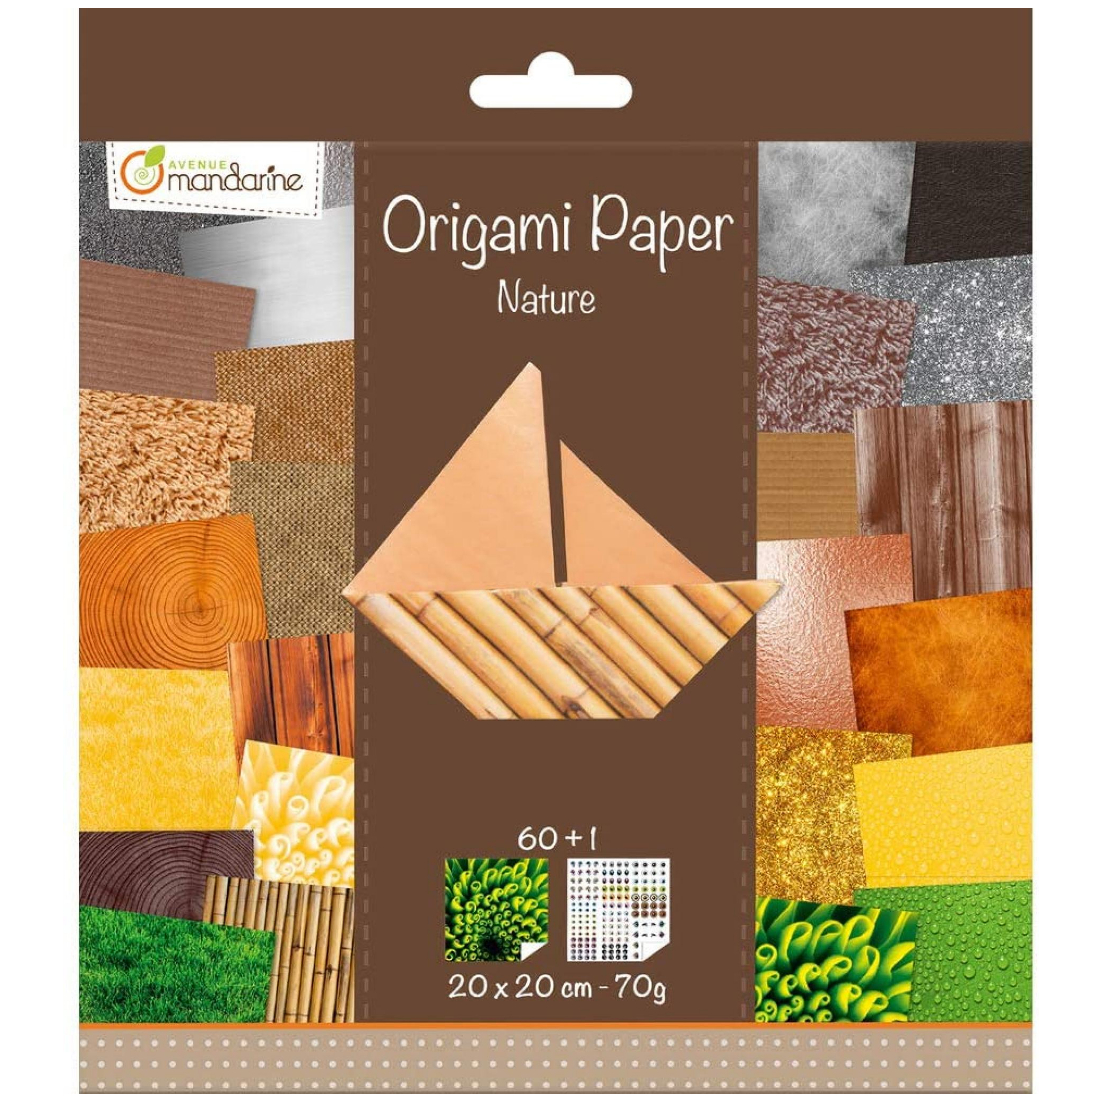 Papel Origami Natureza avenue mandarin